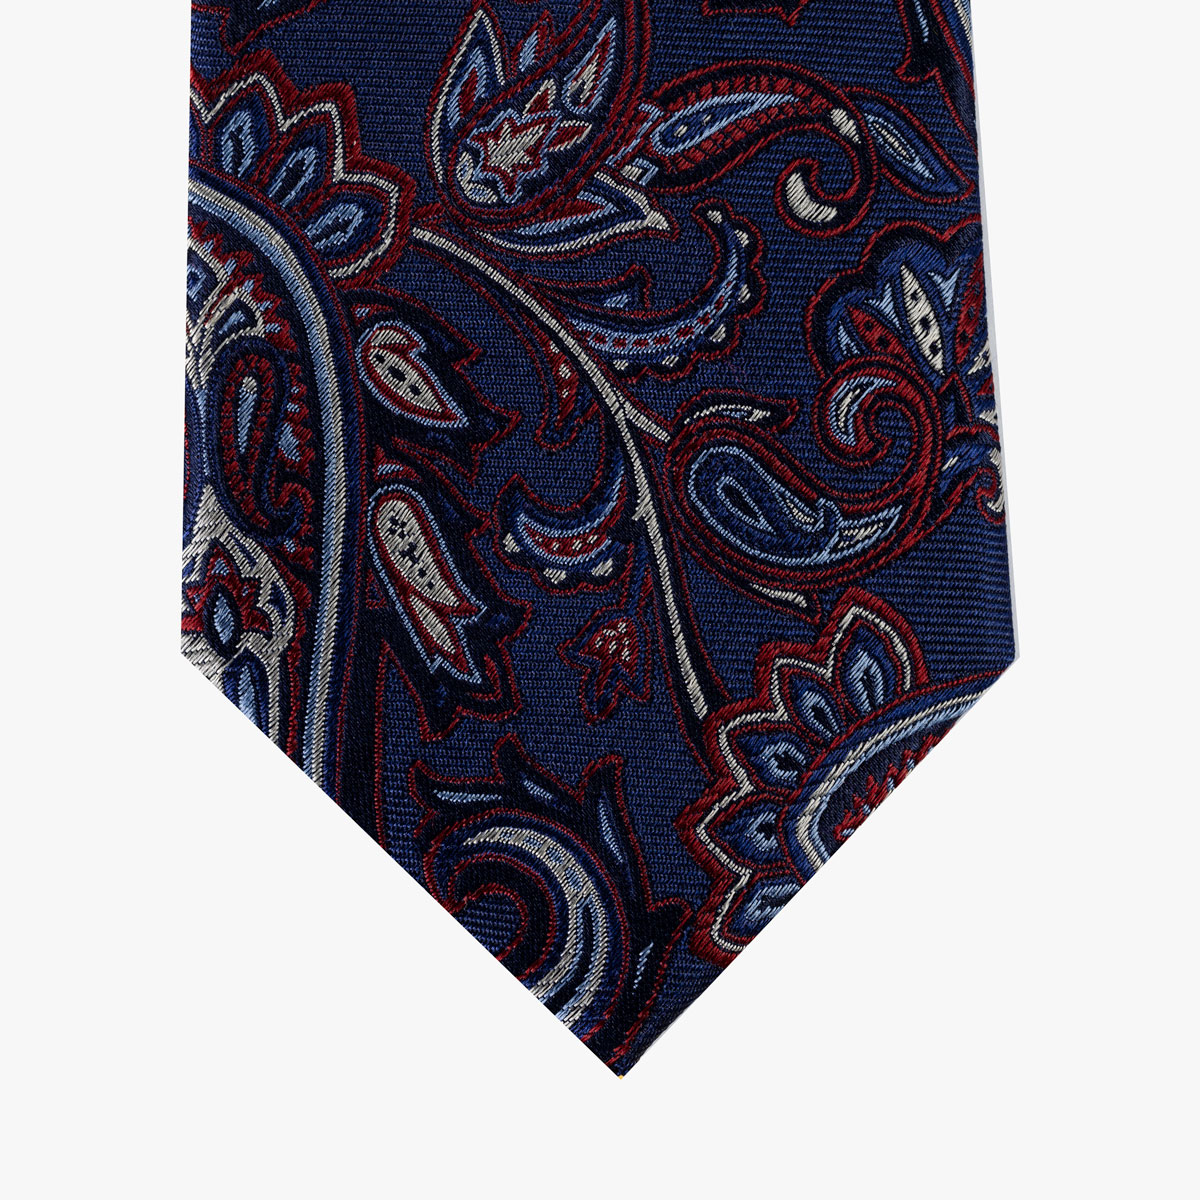 Krawatte mit Paisley in blau rot silber